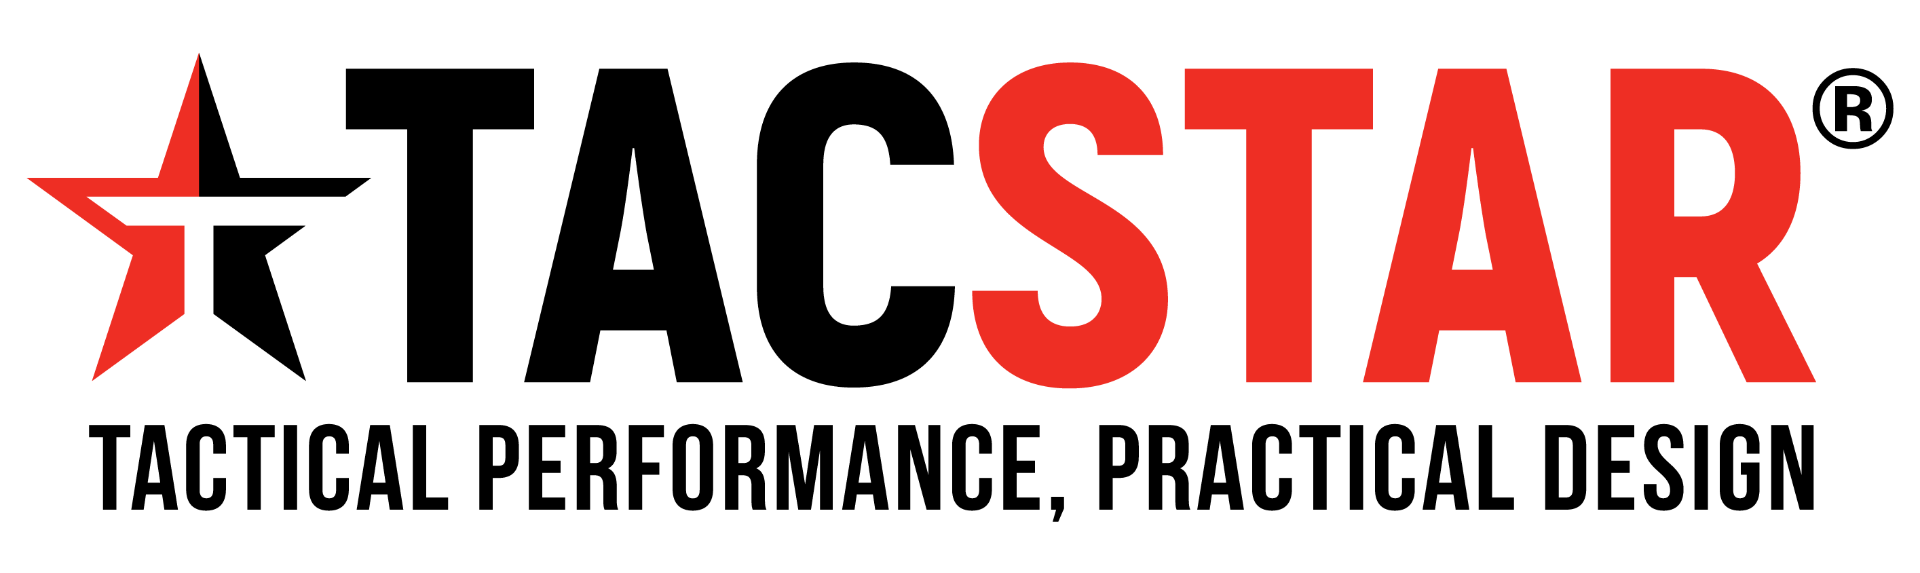 TacStar-Logo-2017-_1_